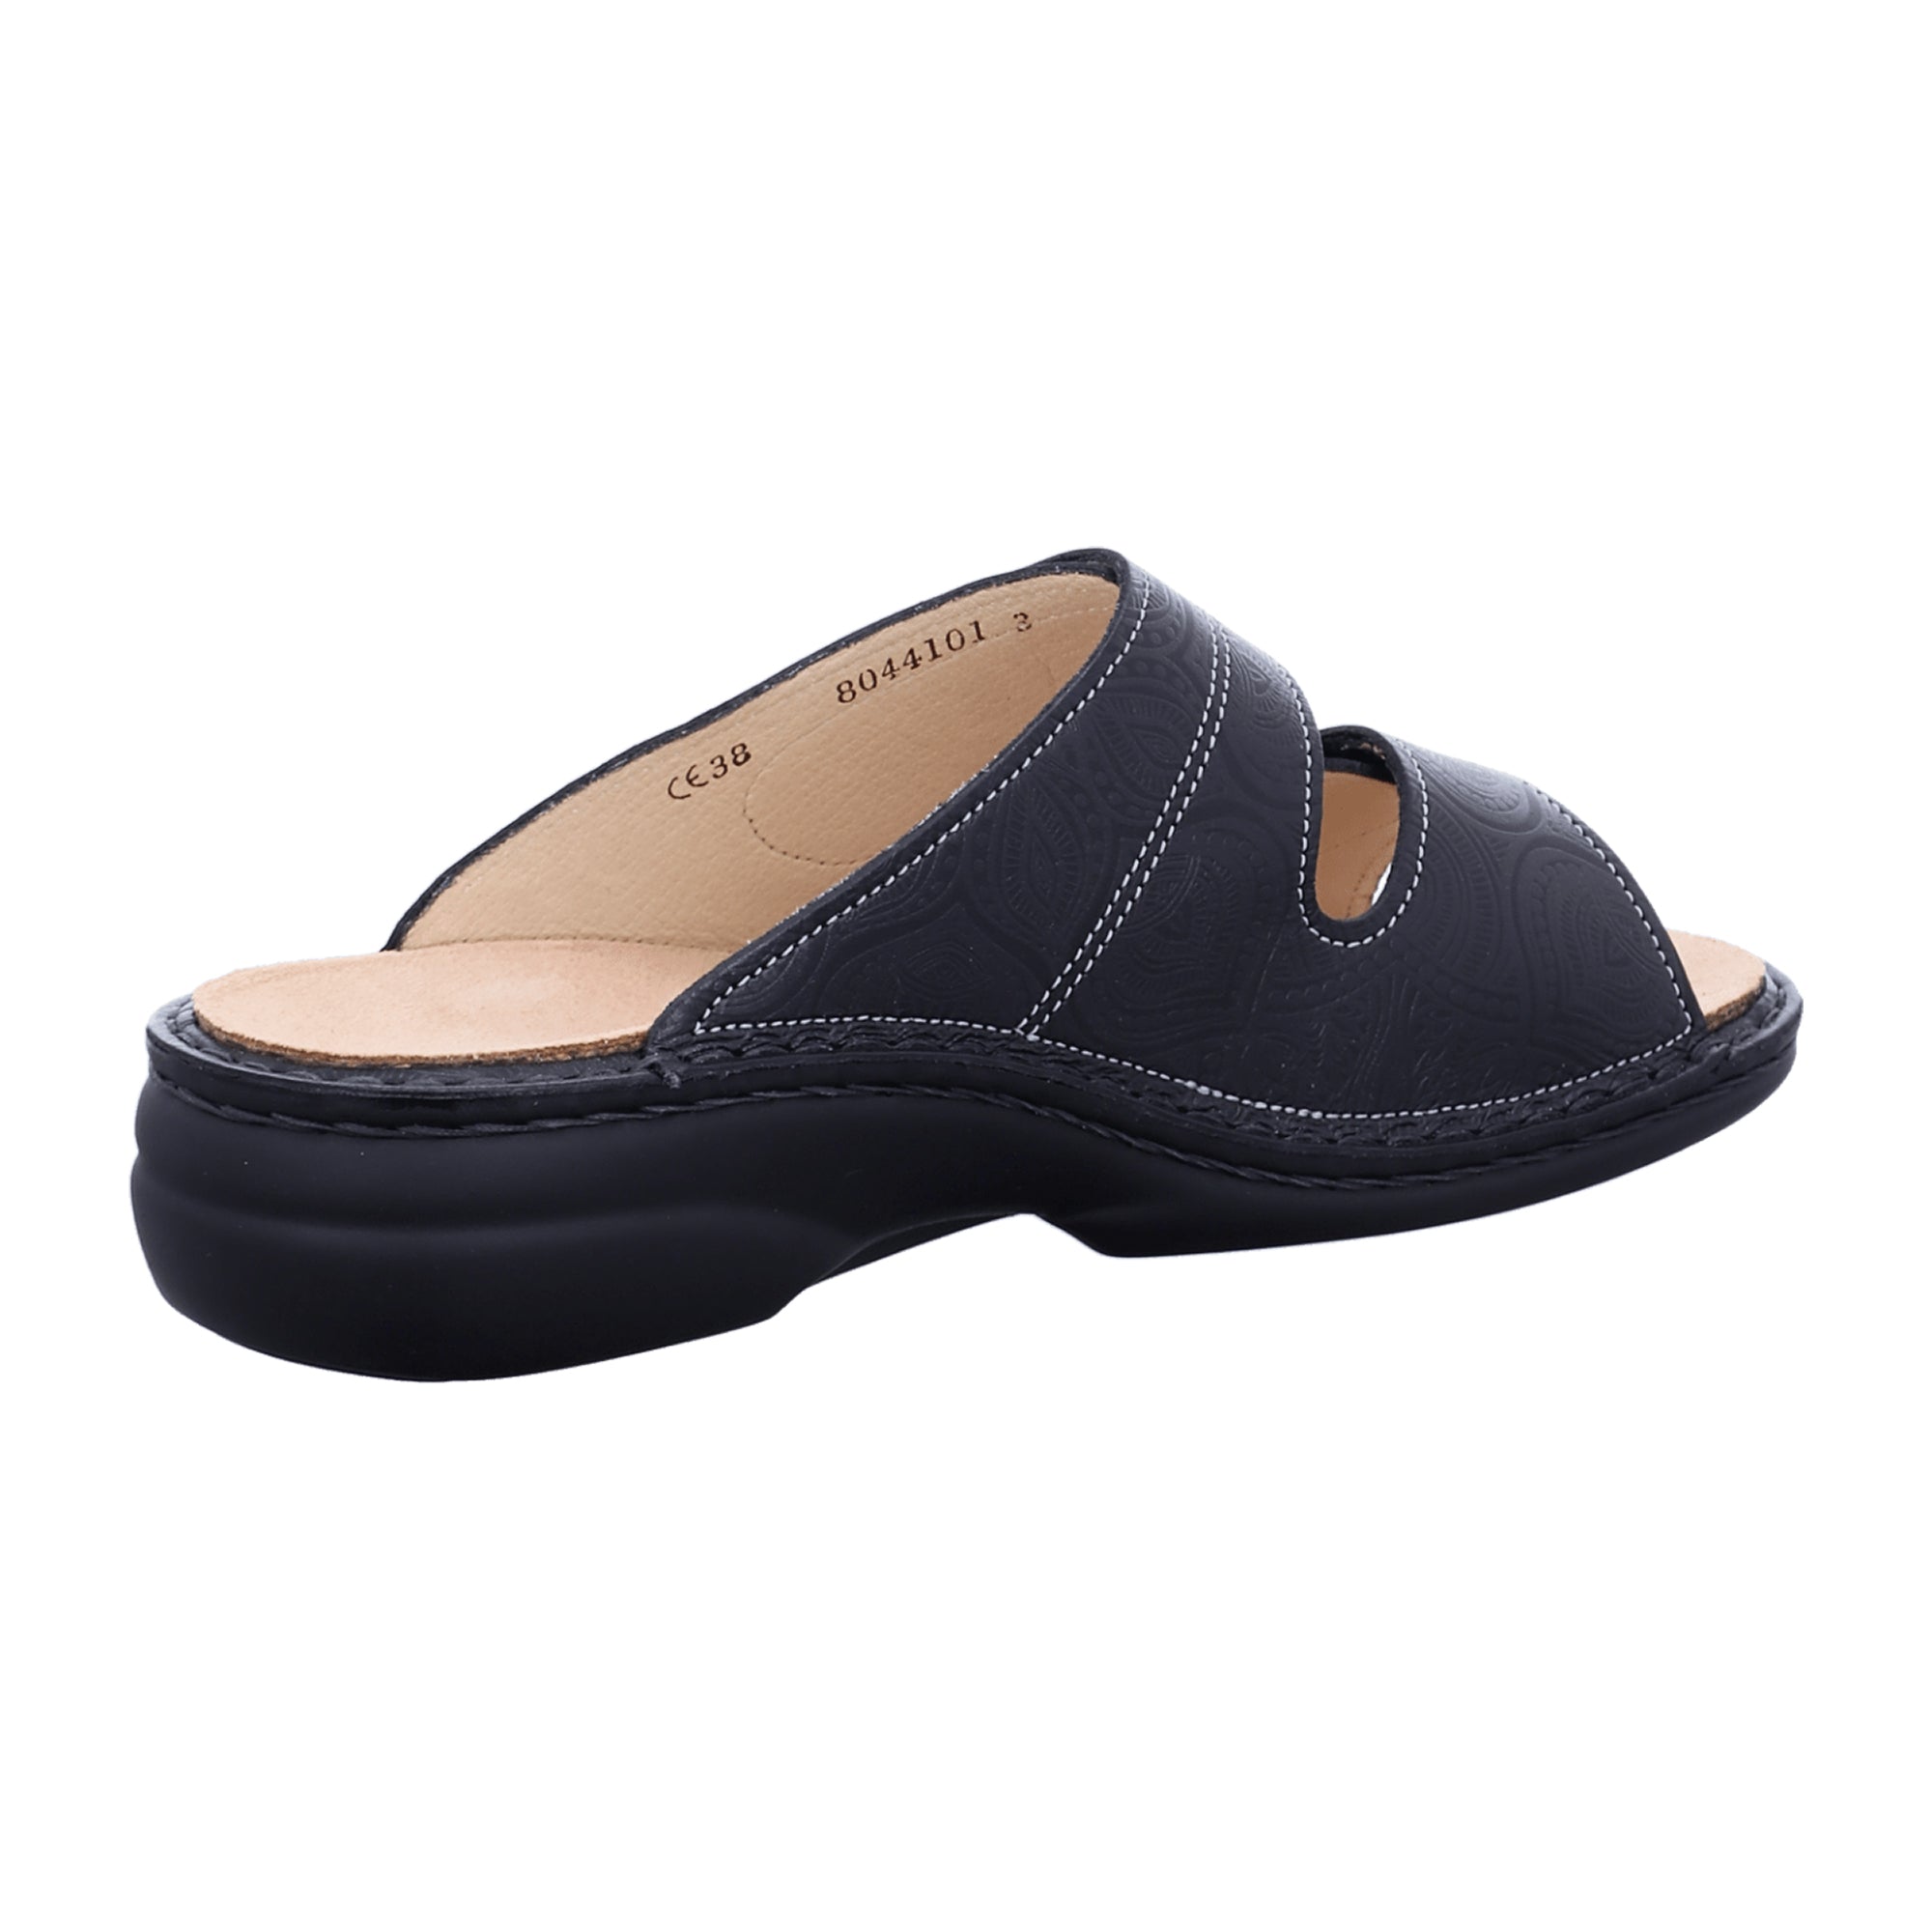 Finn Comfort Sansibar Women's Slides - Black Leather Comfort Sandals with Orthopedic Footbed